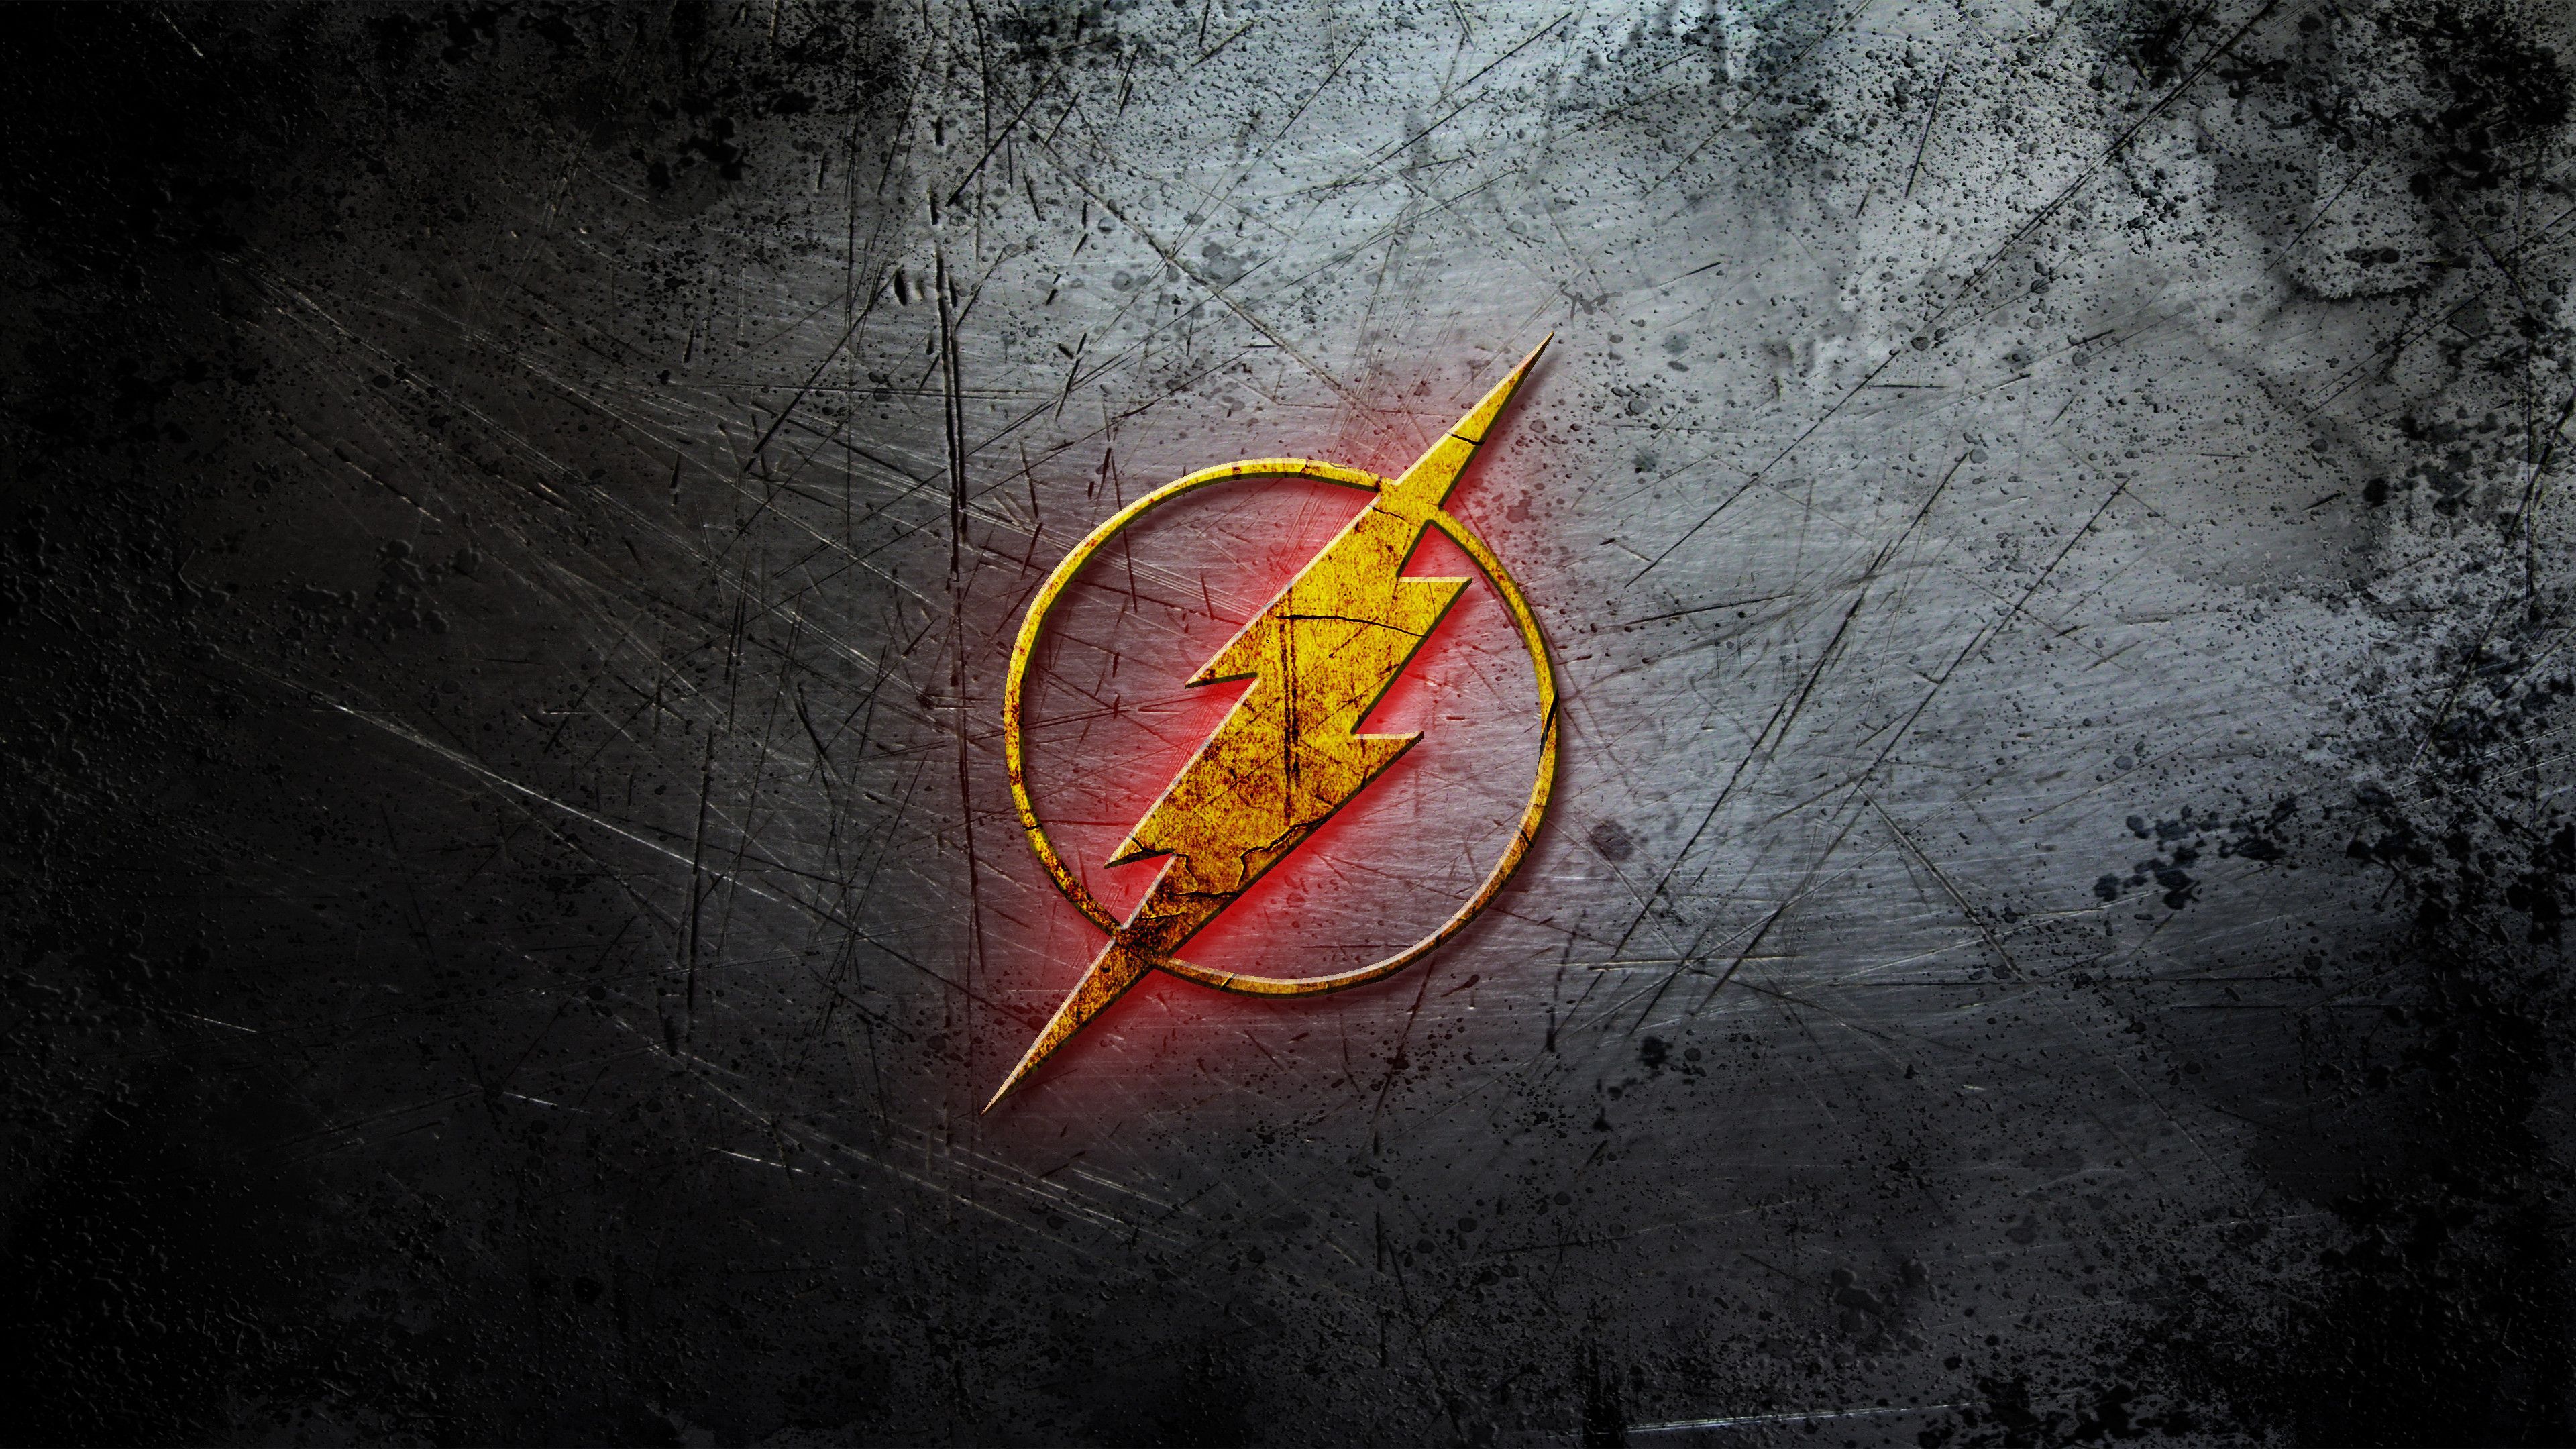 The Flash Logo 4K Wallpaper Free The Flash Logo 4K Background